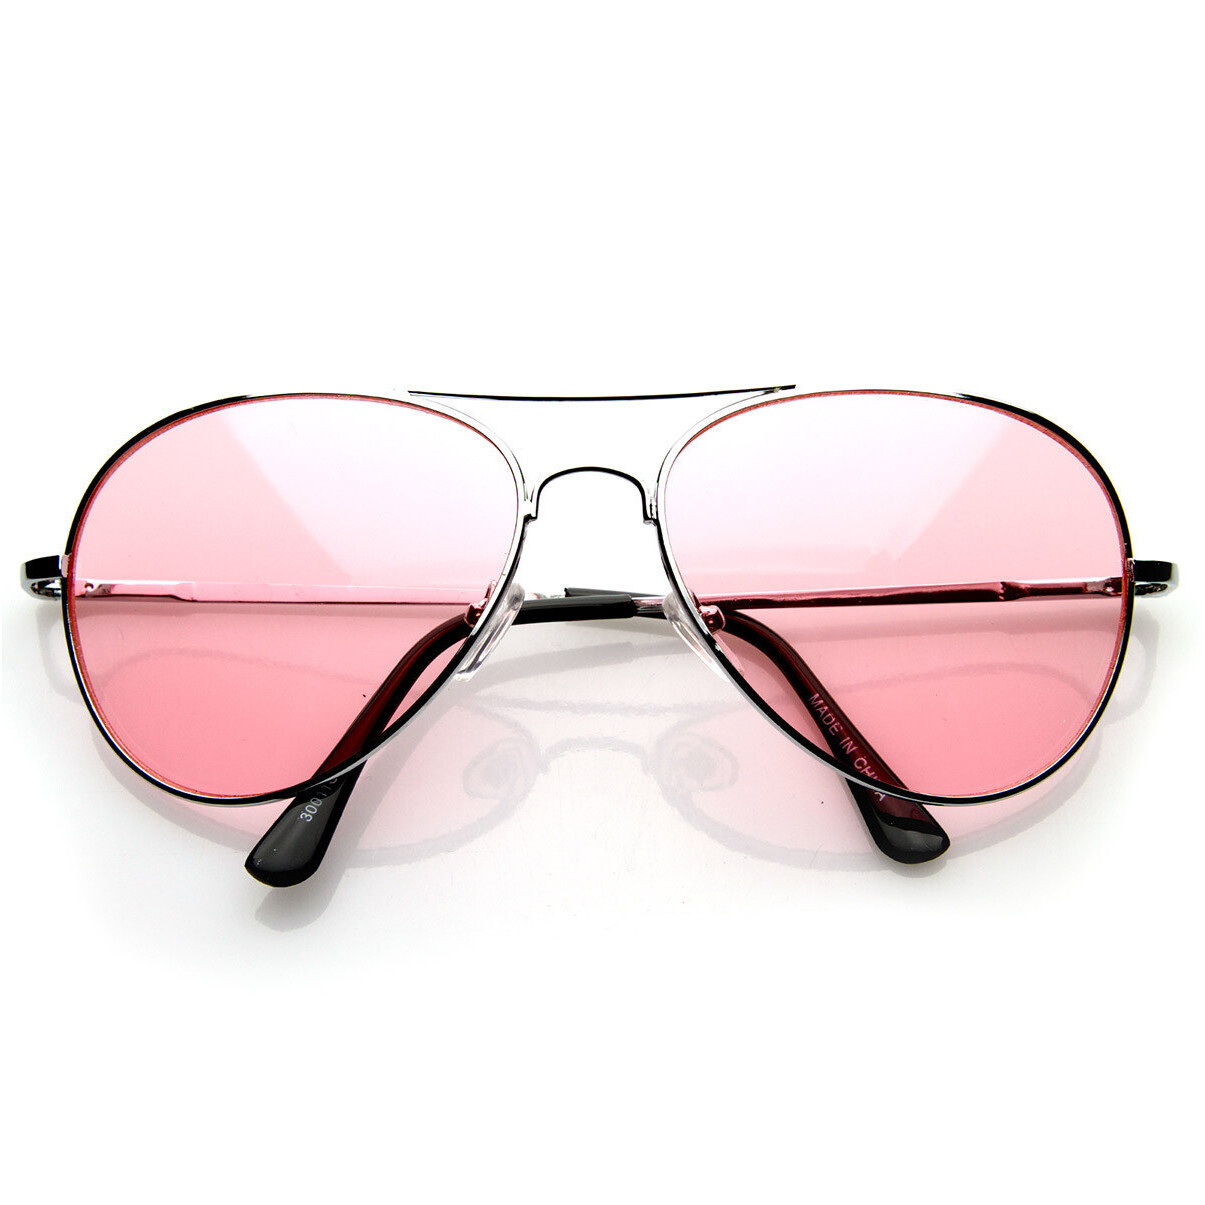 Colorful Premium Silver Metal Aviator Glasses With Color Lens Sunglasses - 8405 - Orange